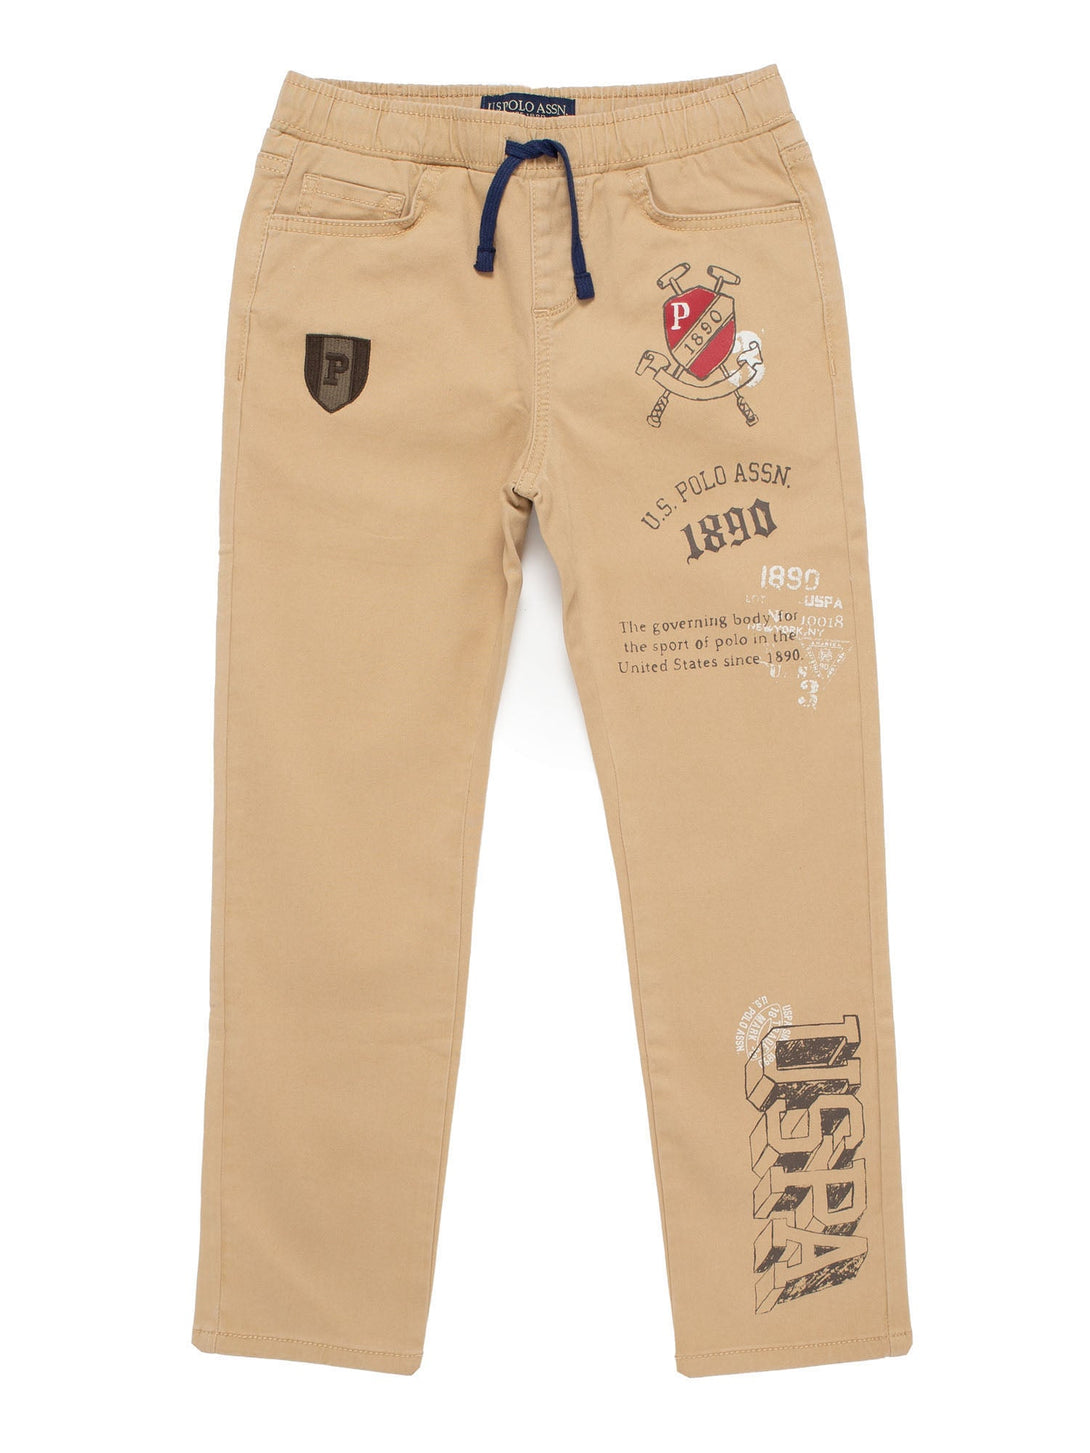 U.S. Polo Boys Twill Pants, 14-16T - Hatolna Shop